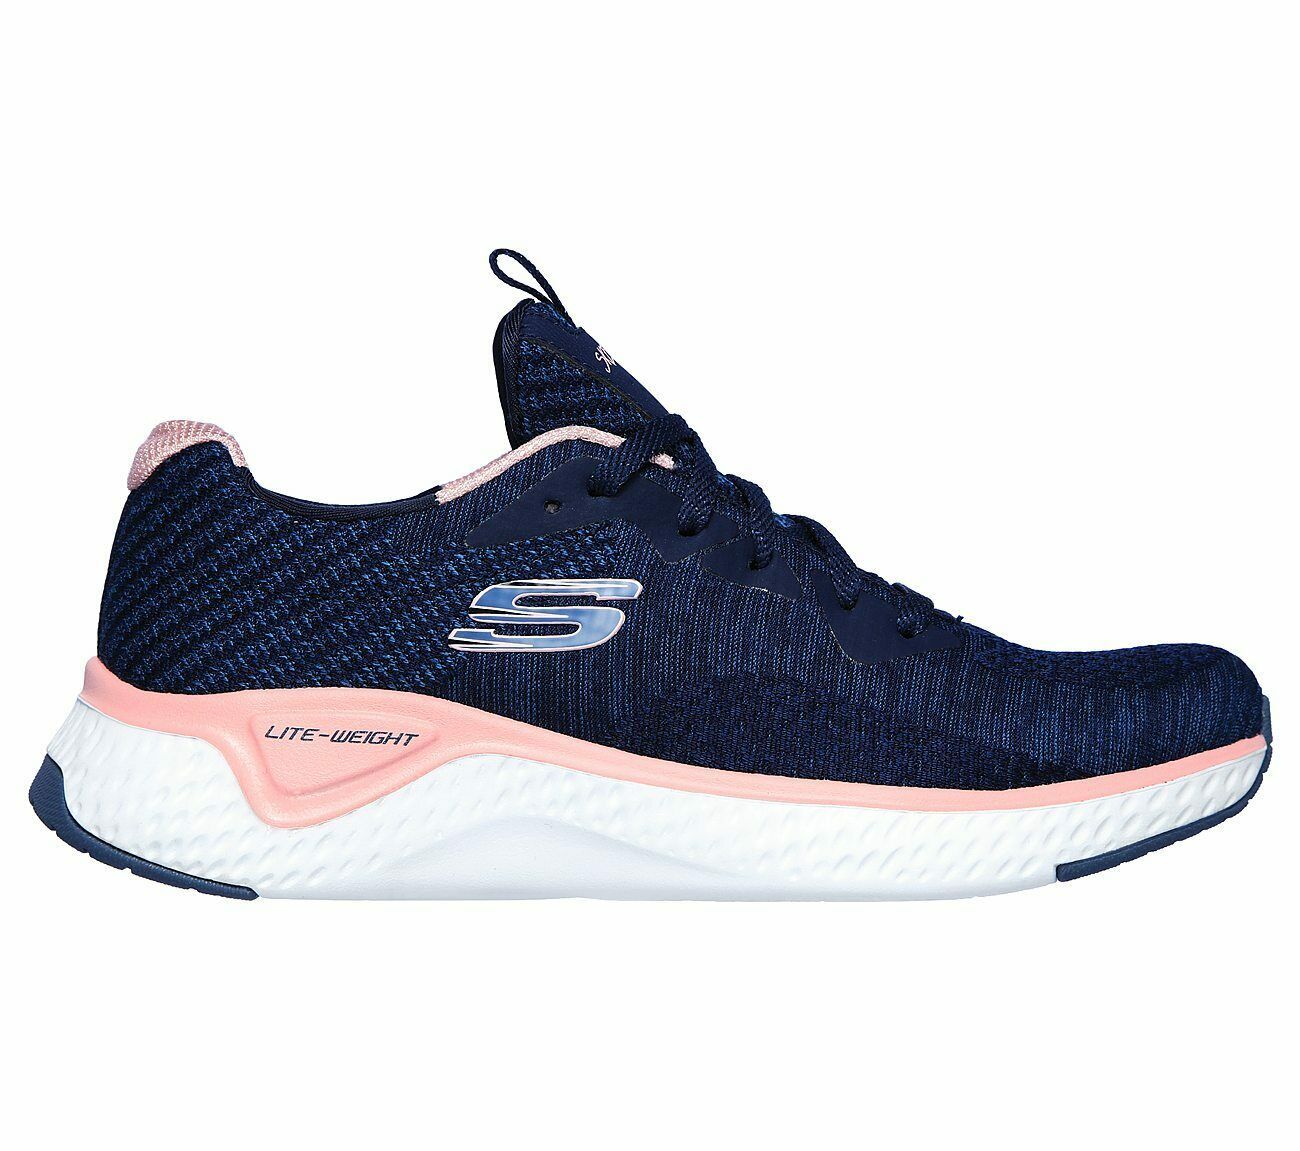 Skechers Wide Fit Navy Shoes Memory Foam Women's Sport Comfort Soft Casual 13328 - Athletic